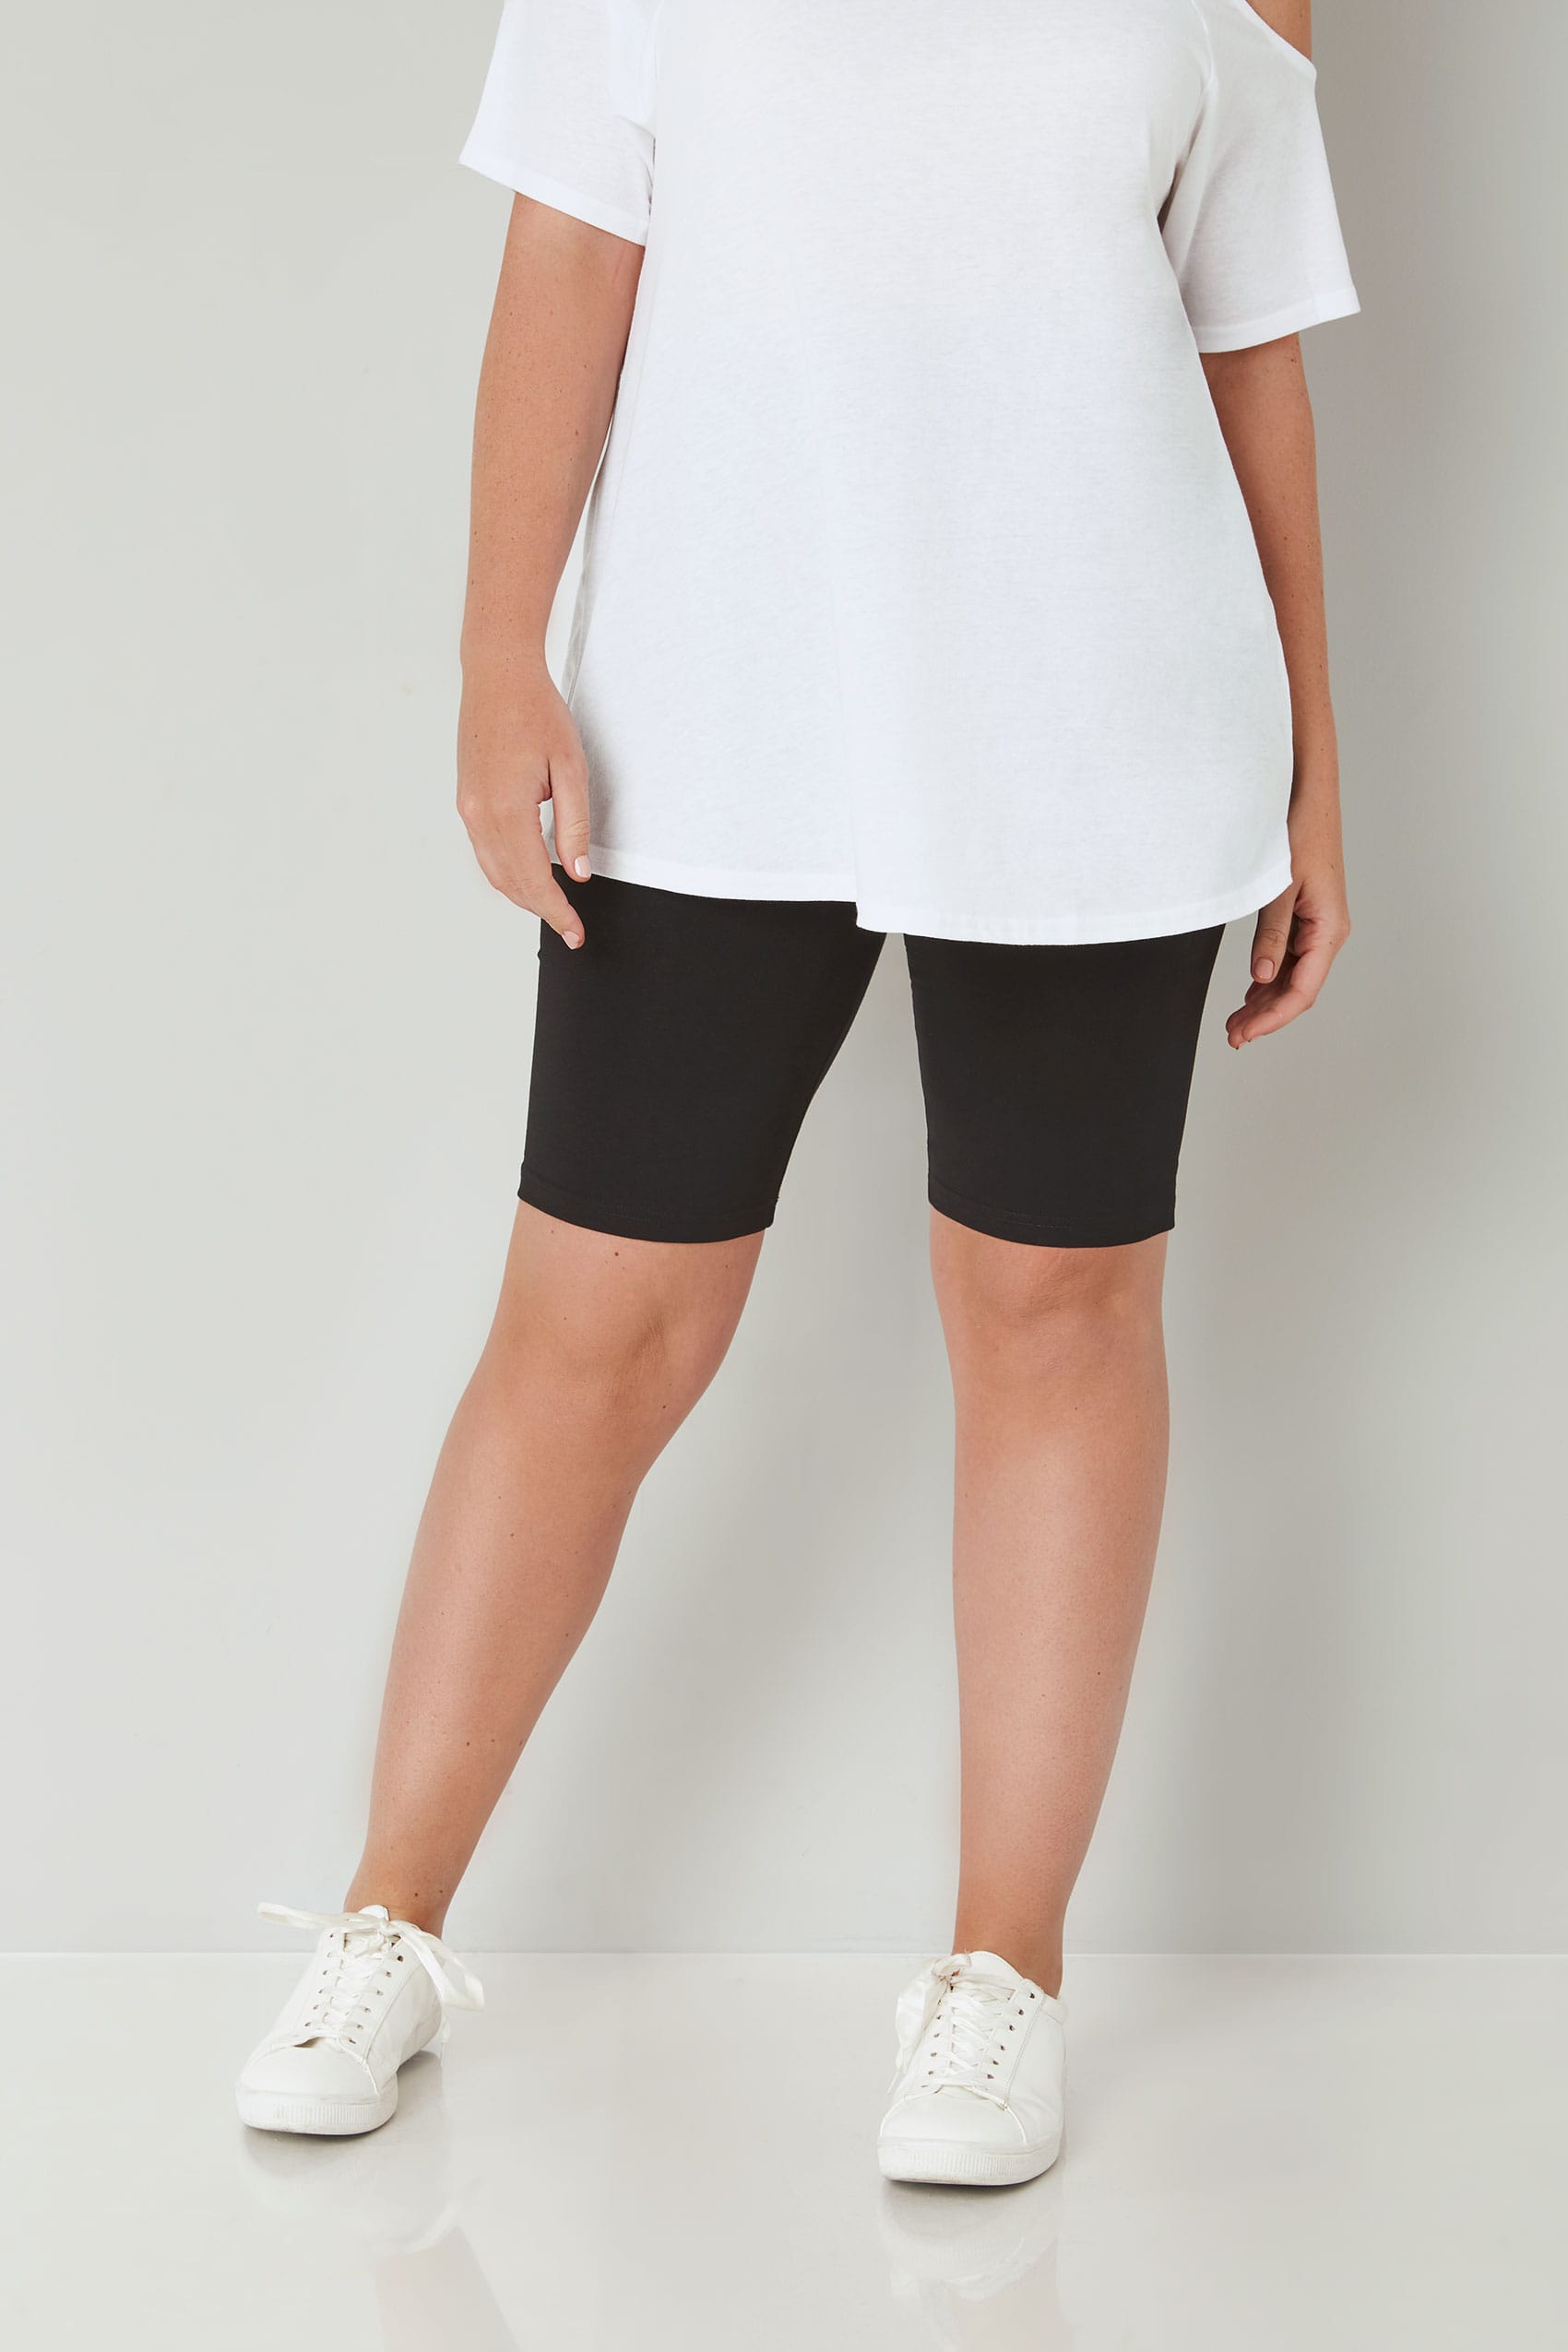 Black Cotton Essential Legging Shorts Plus Size 16 To 36